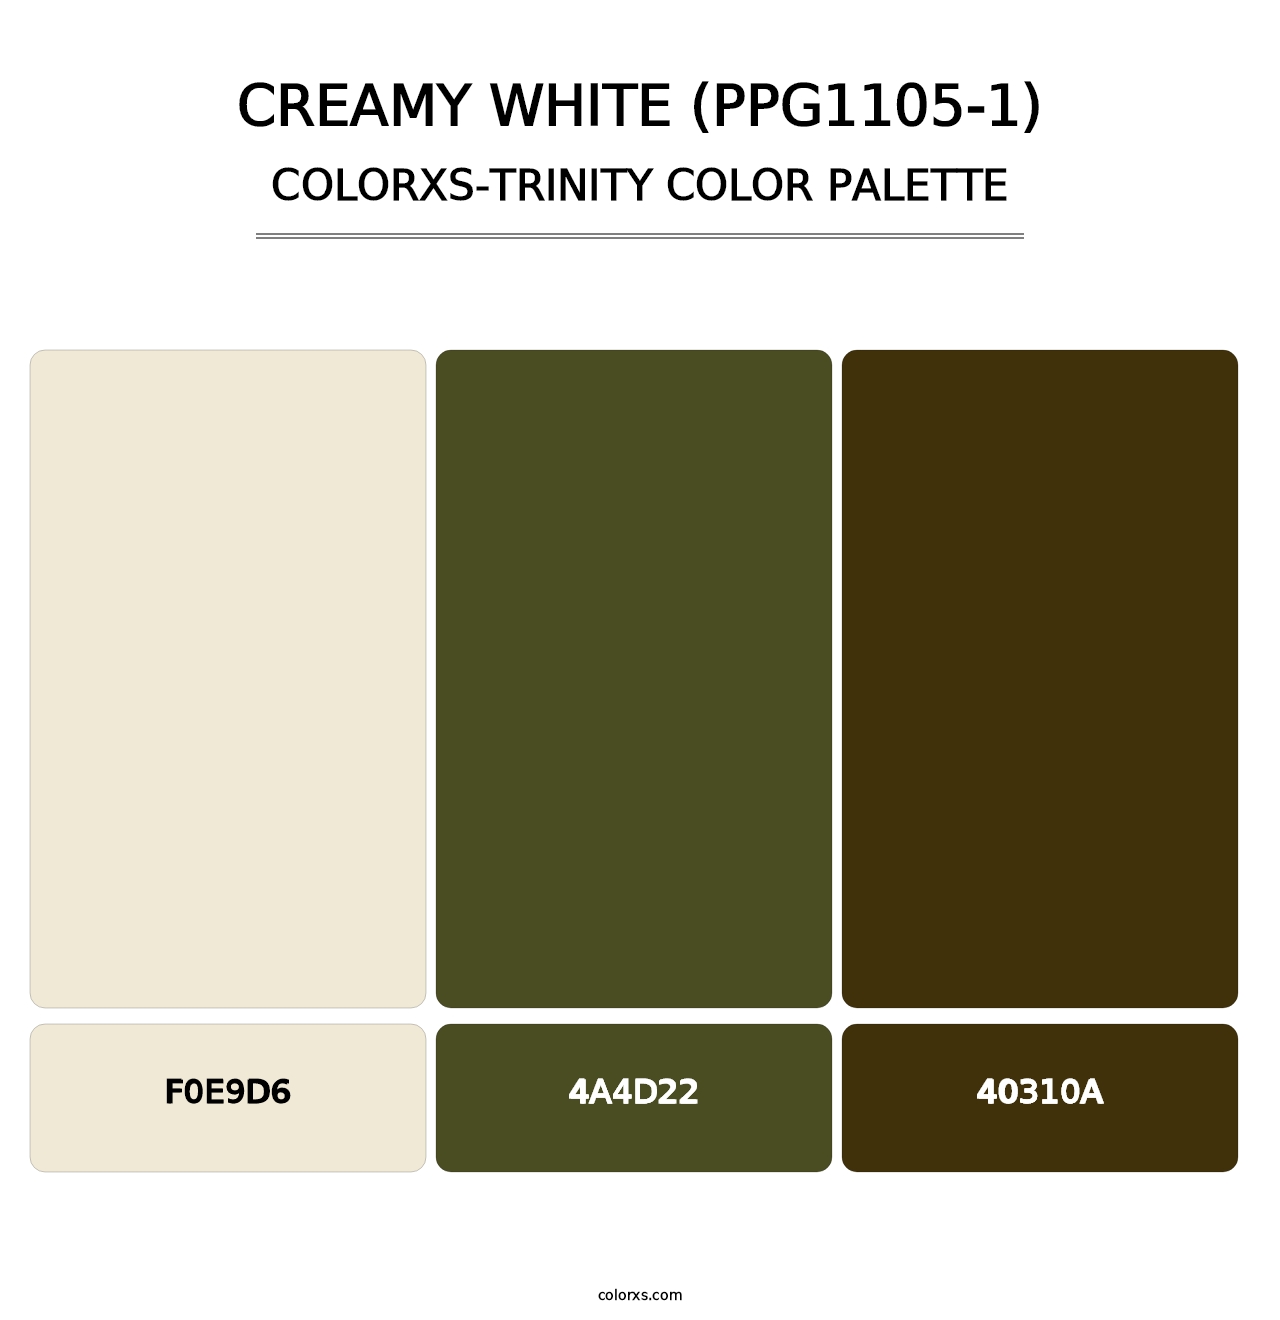 Creamy White (PPG1105-1) - Colorxs Trinity Palette